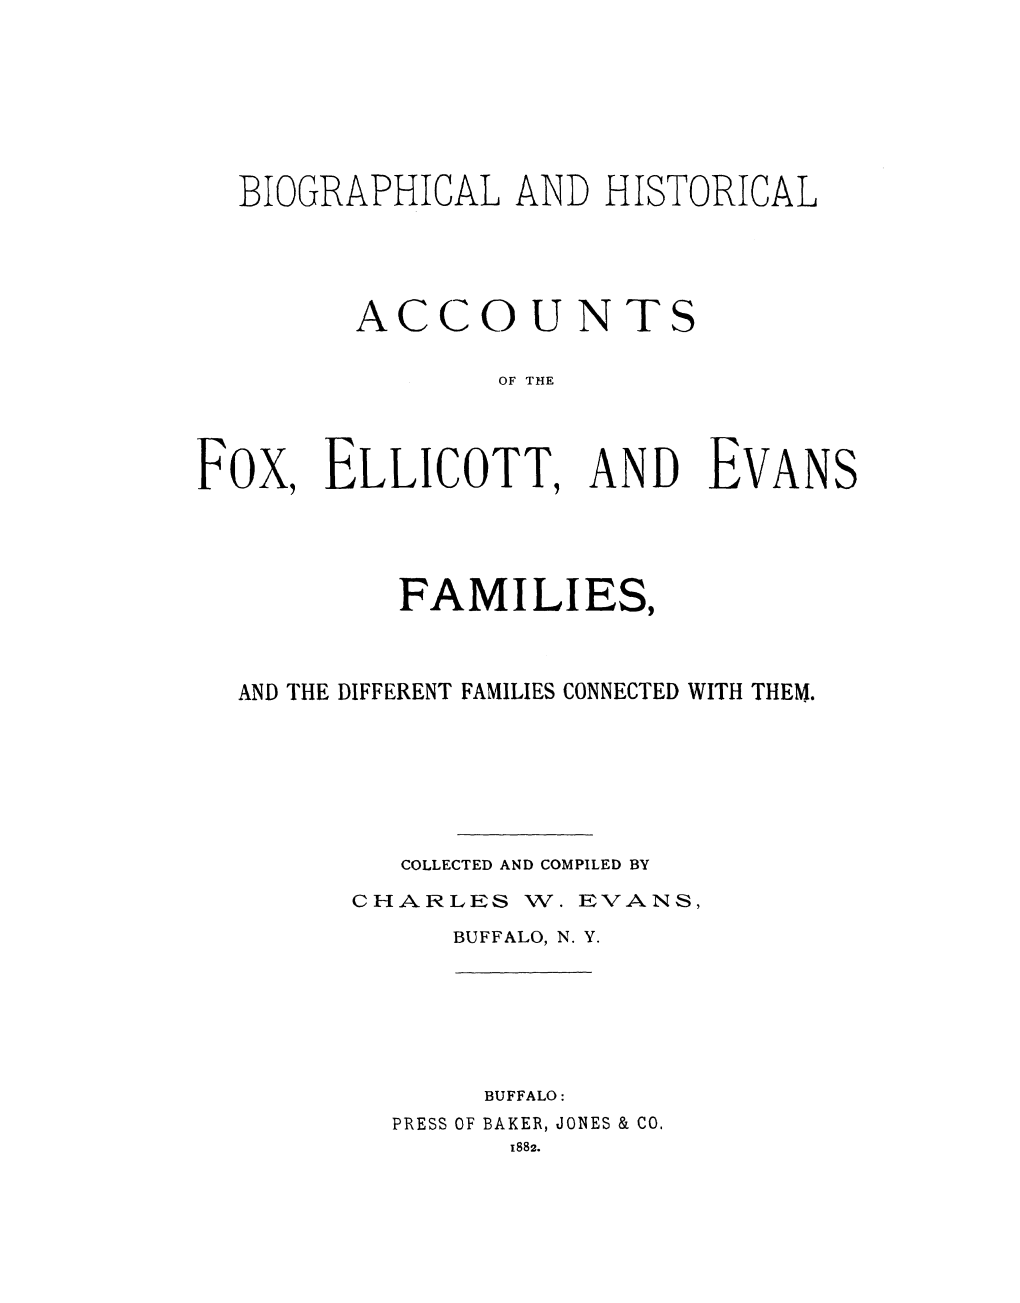 Fox, ELLICOTT, and EVANS